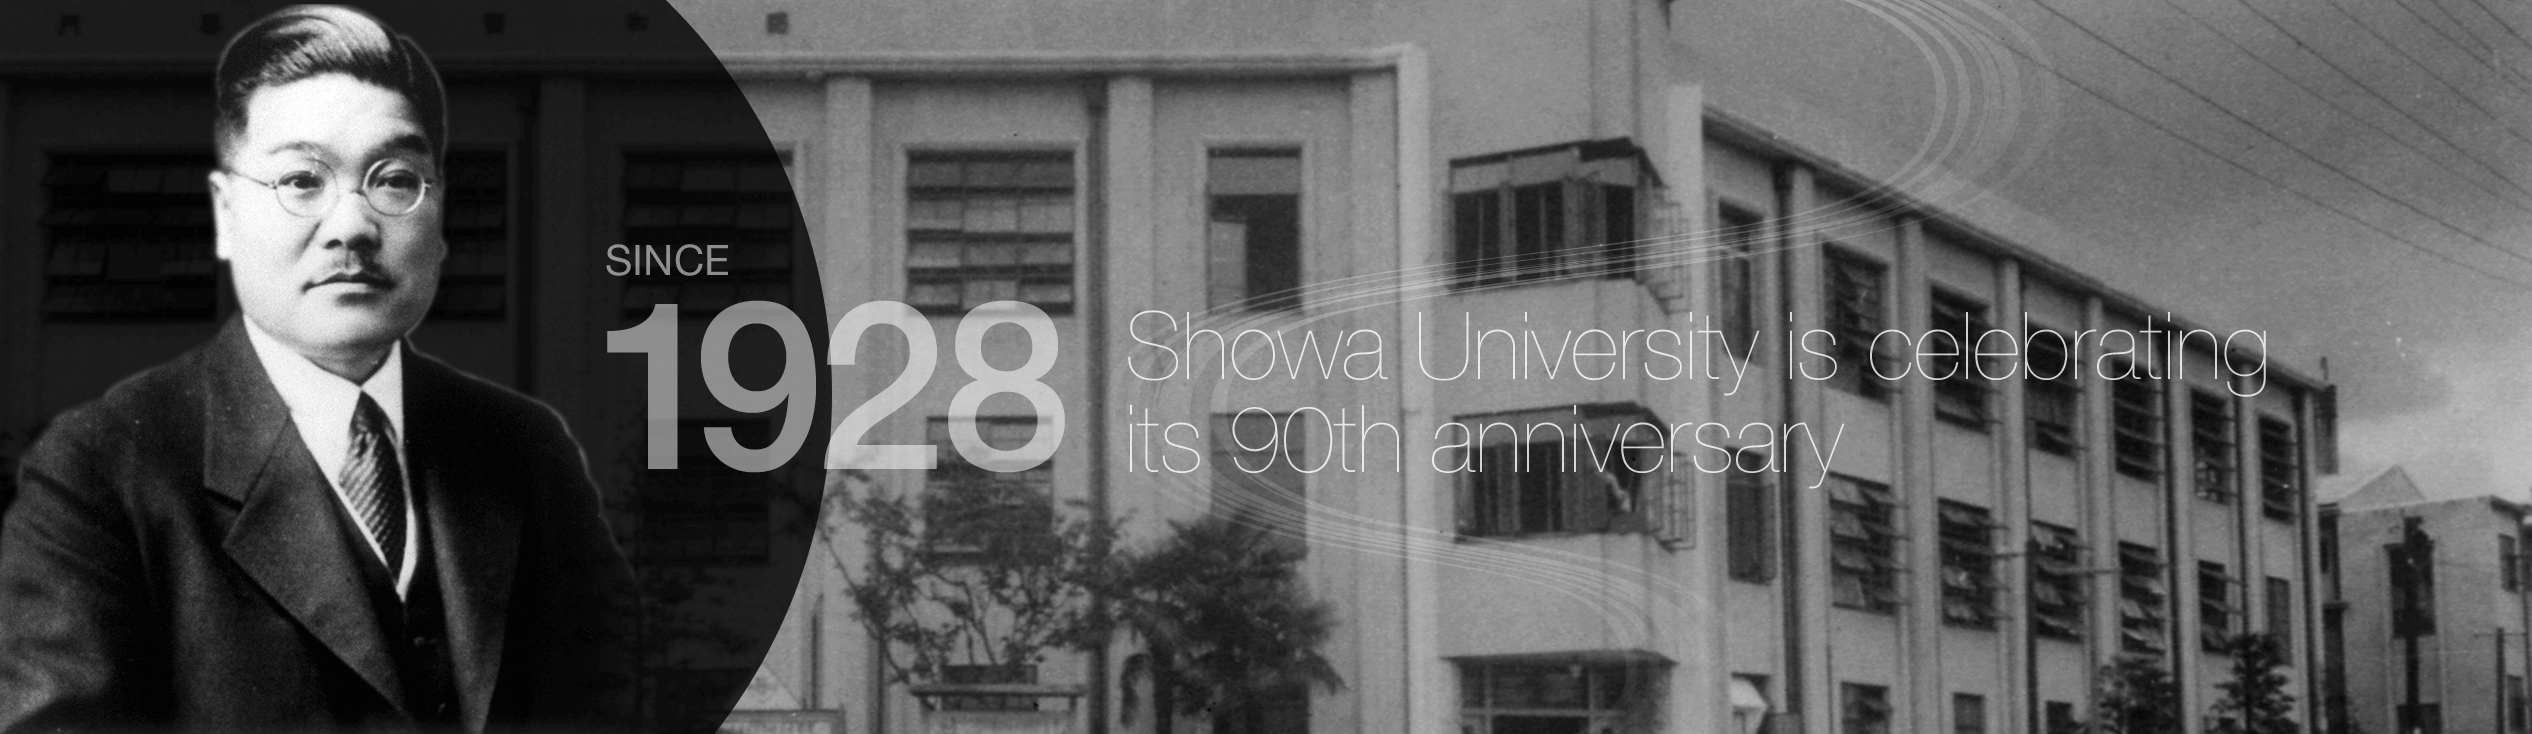 SINCE 1928 Showa University is celebrating its 90th anniversary